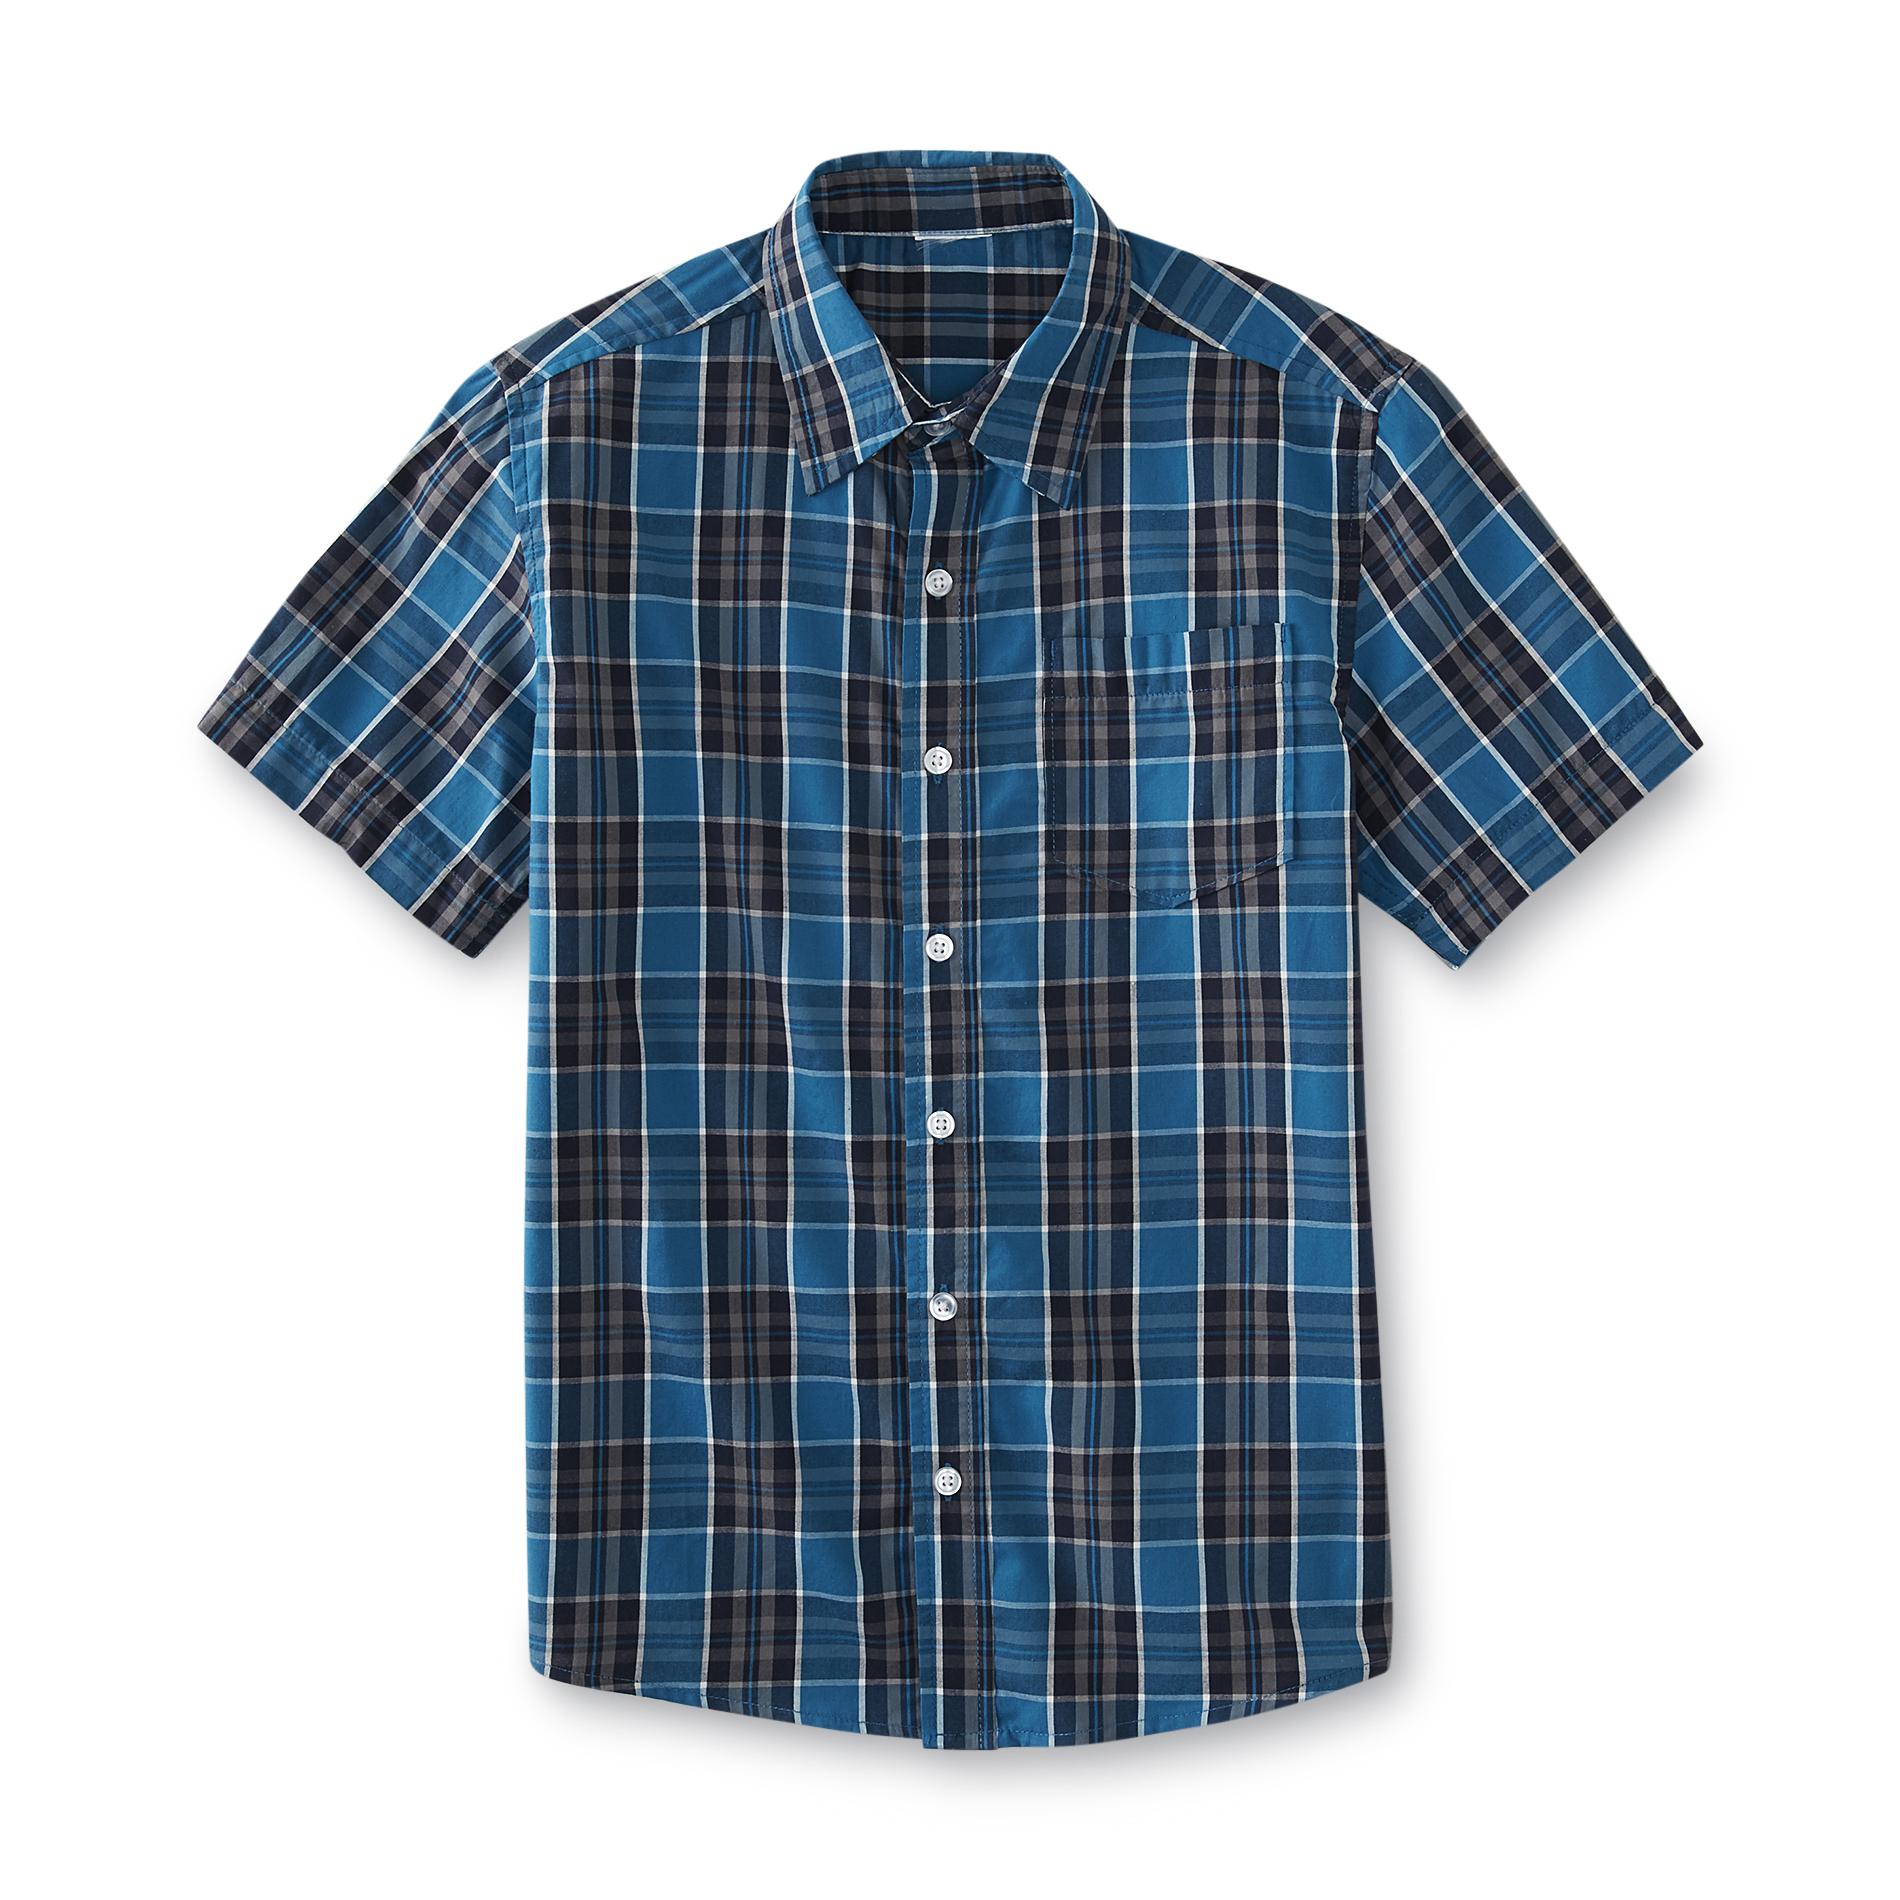 Simply Styled Boy's Short-Sleeve Shirt - Plaid